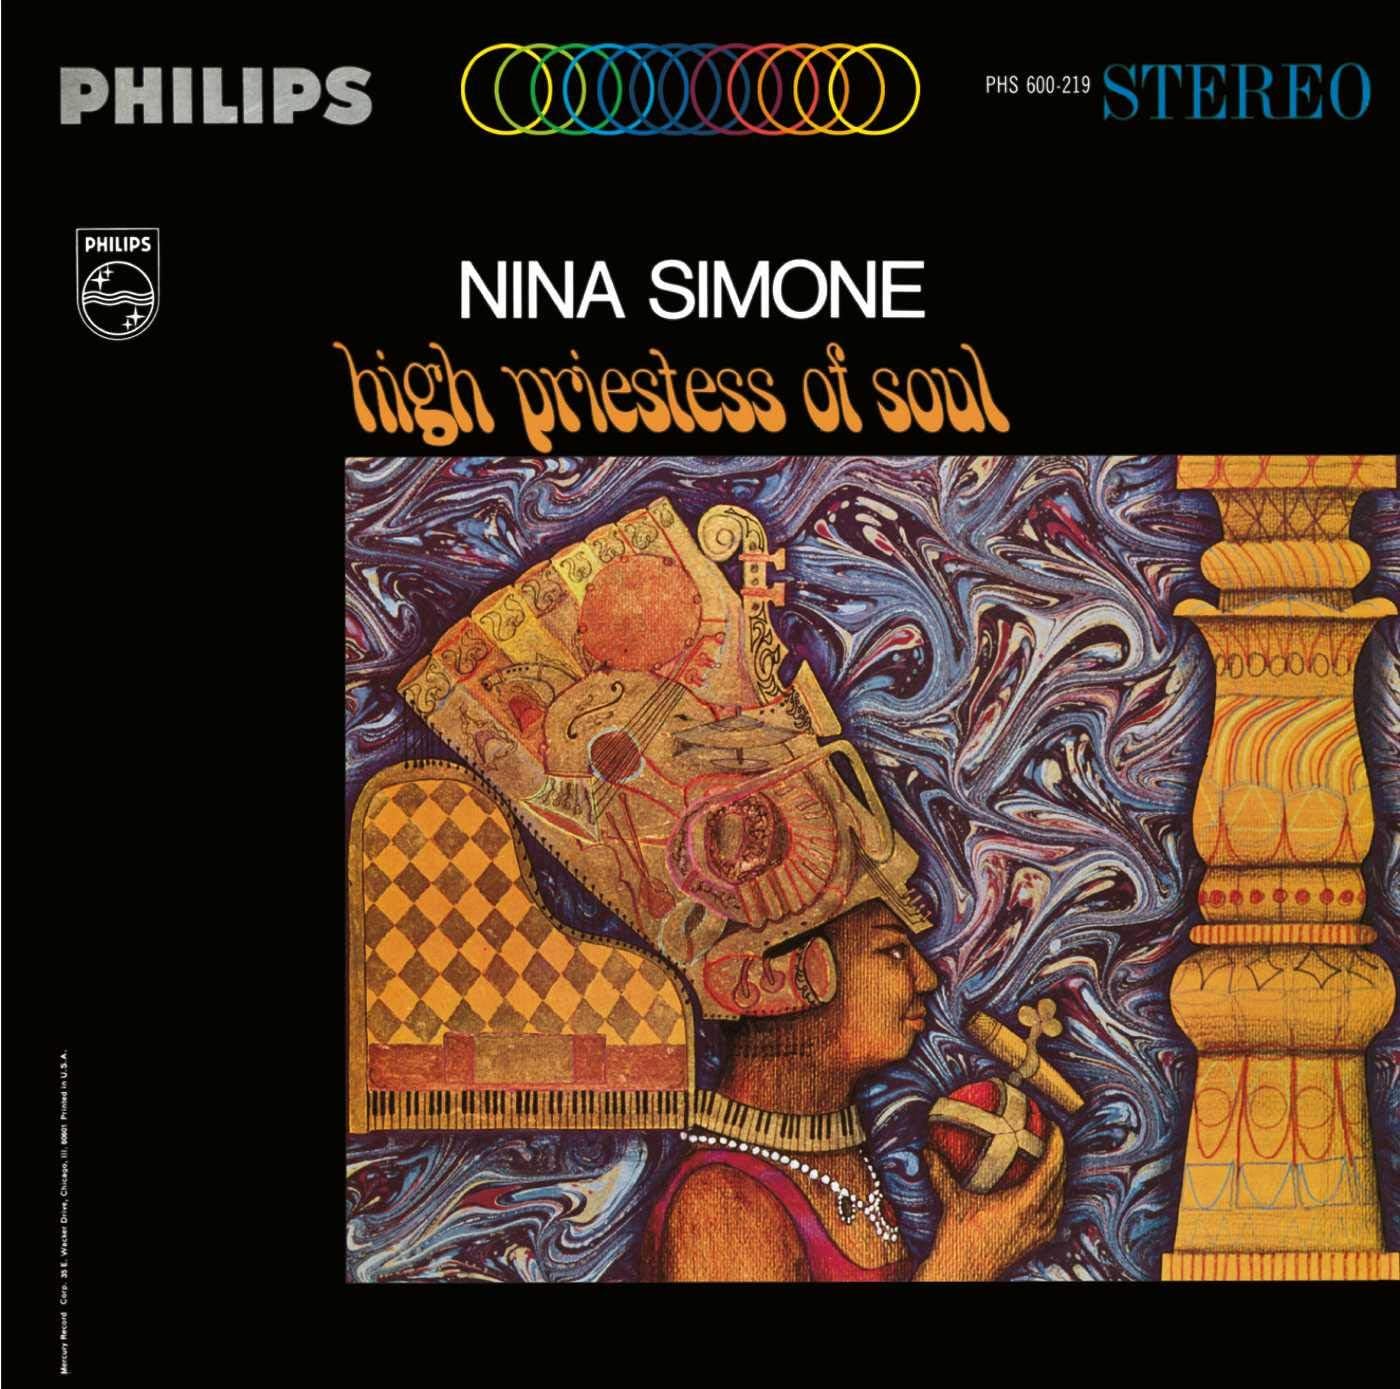 Nina Simone - High priestess of soul (Vinile 180gr.)